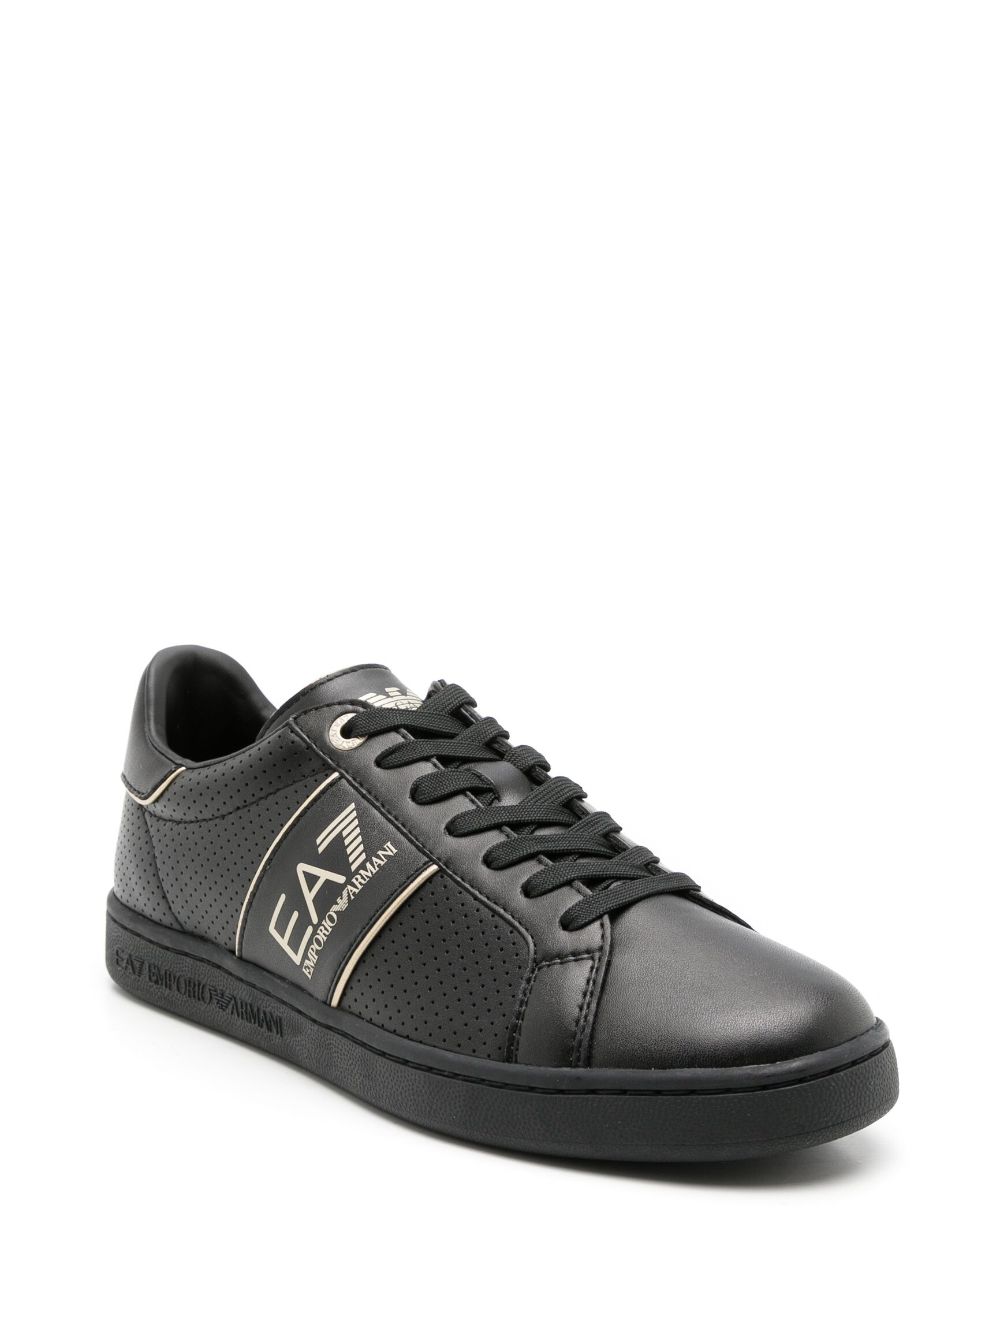 Ea7 Emporio Armani Leather low-top Sneakers - Farfetch